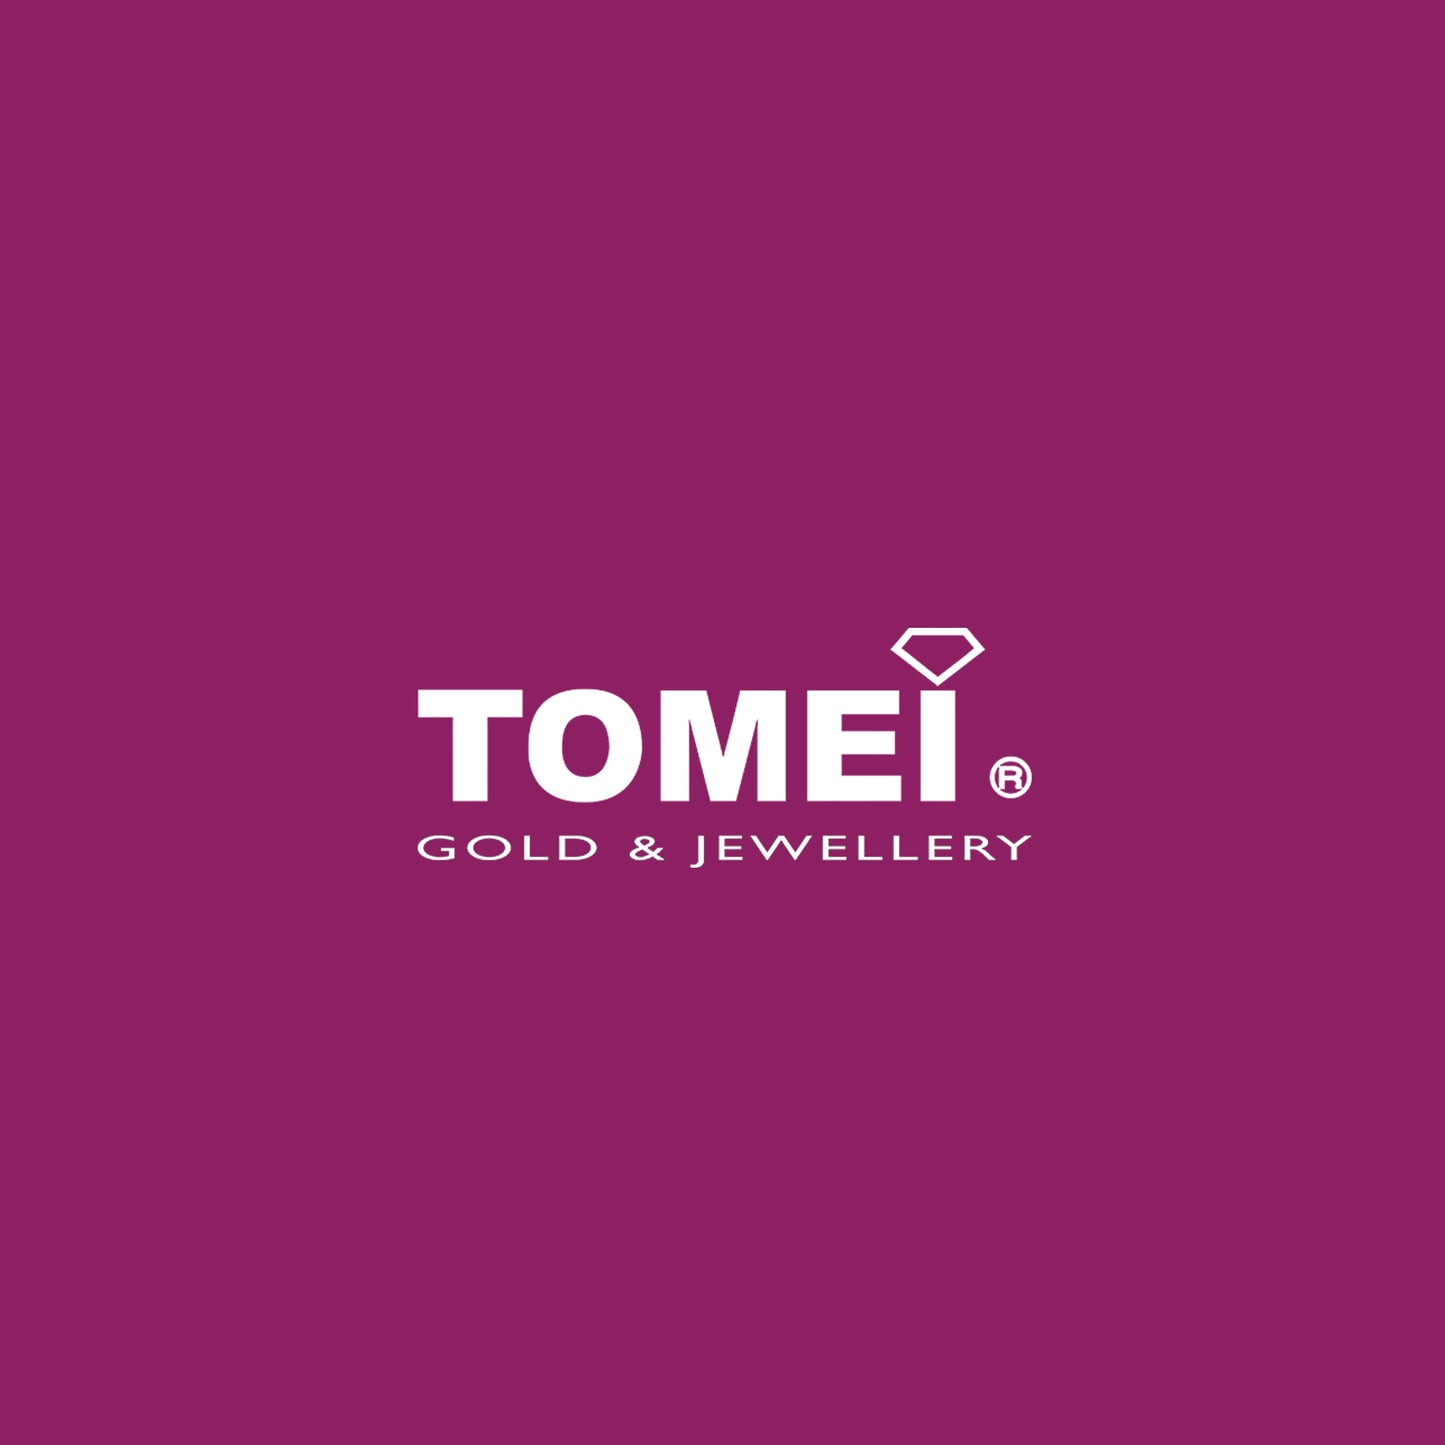 TOMEI Loop Earrings, Diamond White Gold 750 (E1477)